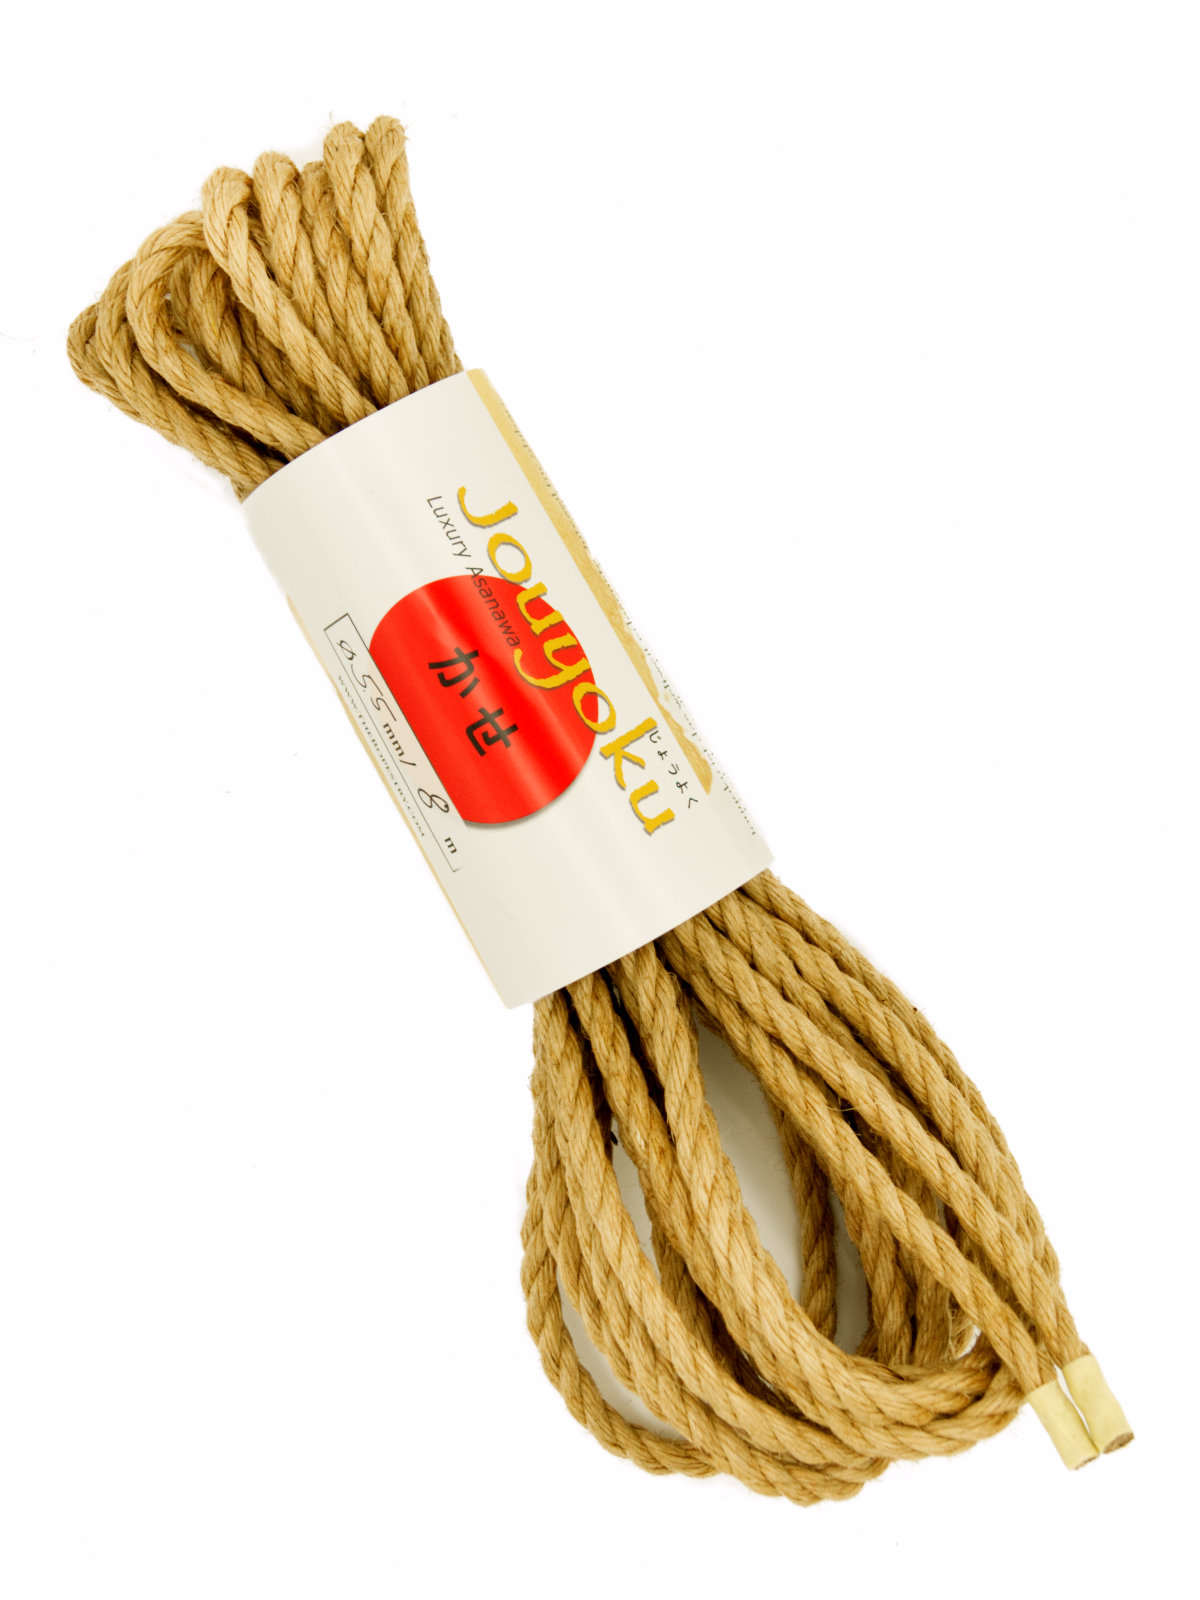 ø 5.5mm JOUYOKU ready-to-use jute rope for Shibari, Kinbaku bondage, various lengths, new 2023 BATCH!